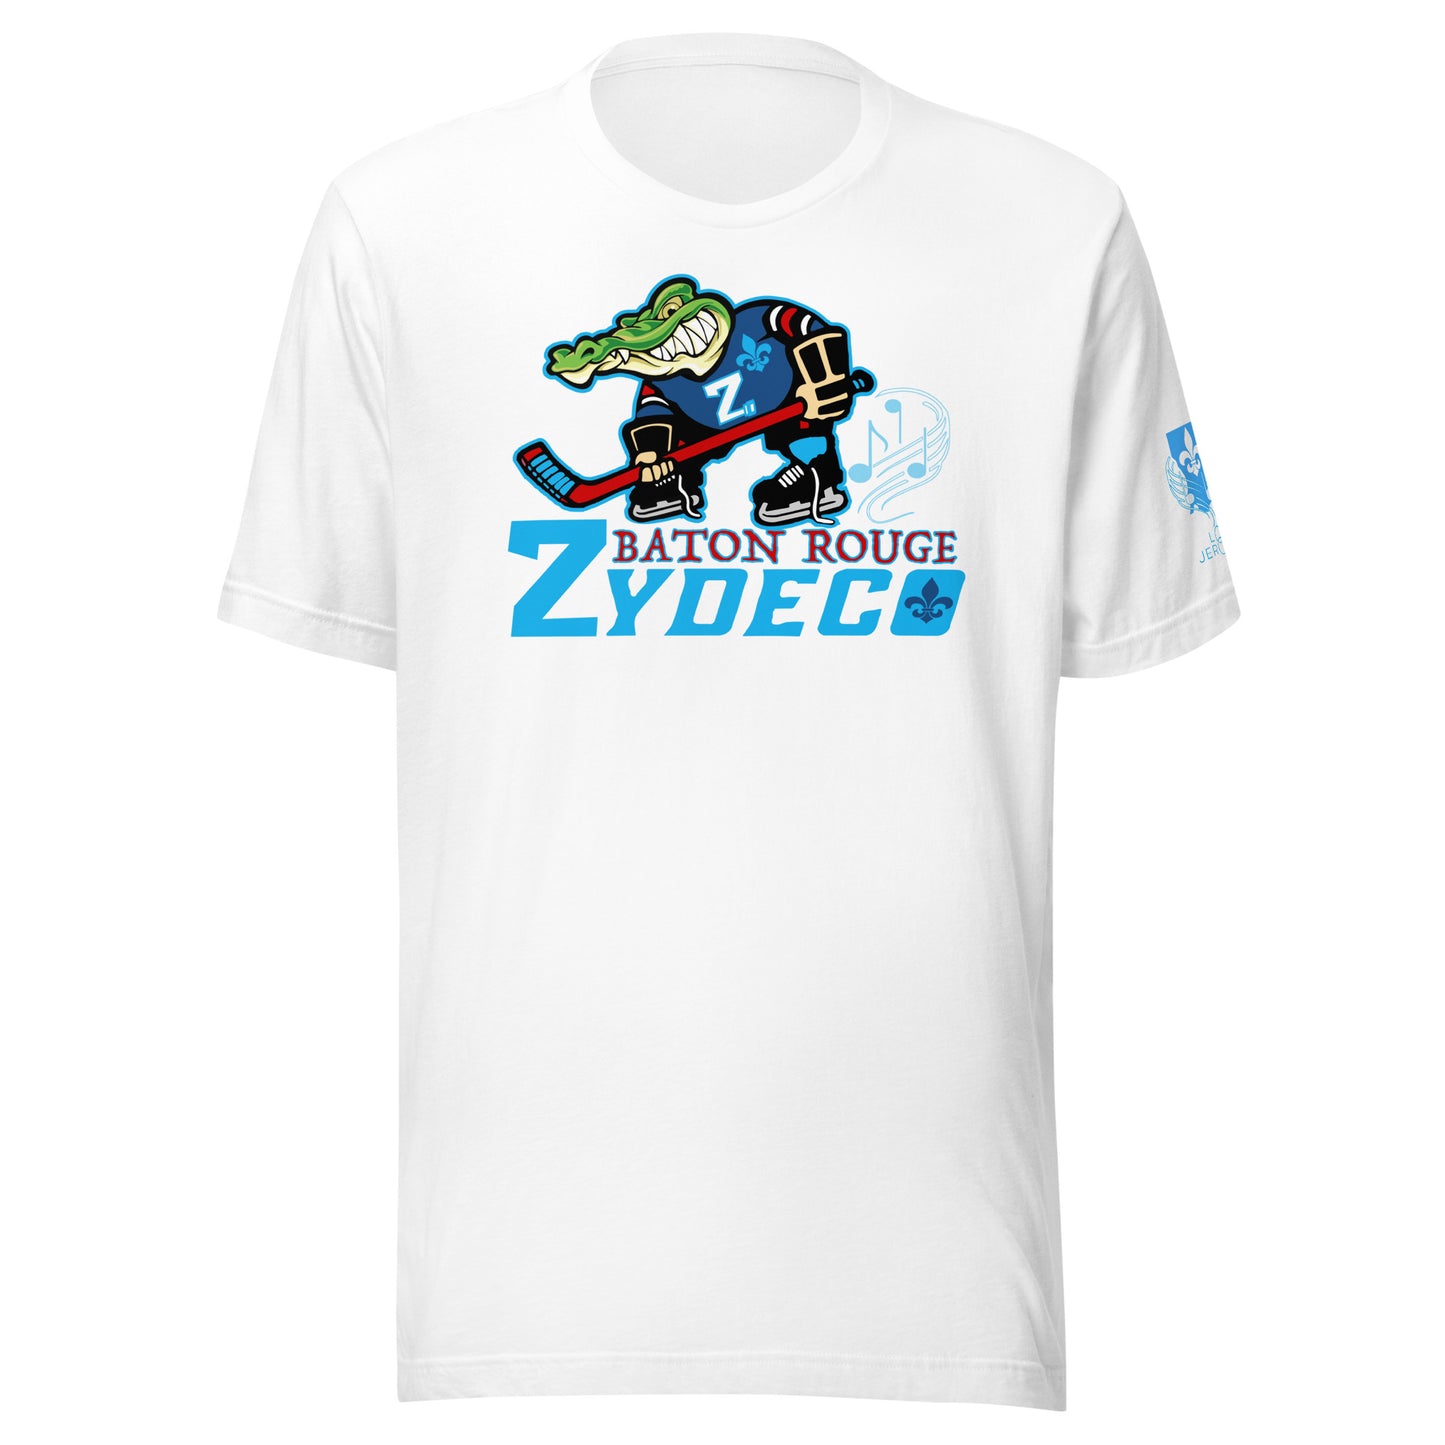 ZYDECO - V1 BLUE/ RED/ WHITE - BELLA CANVAS - Unisex t-shirt